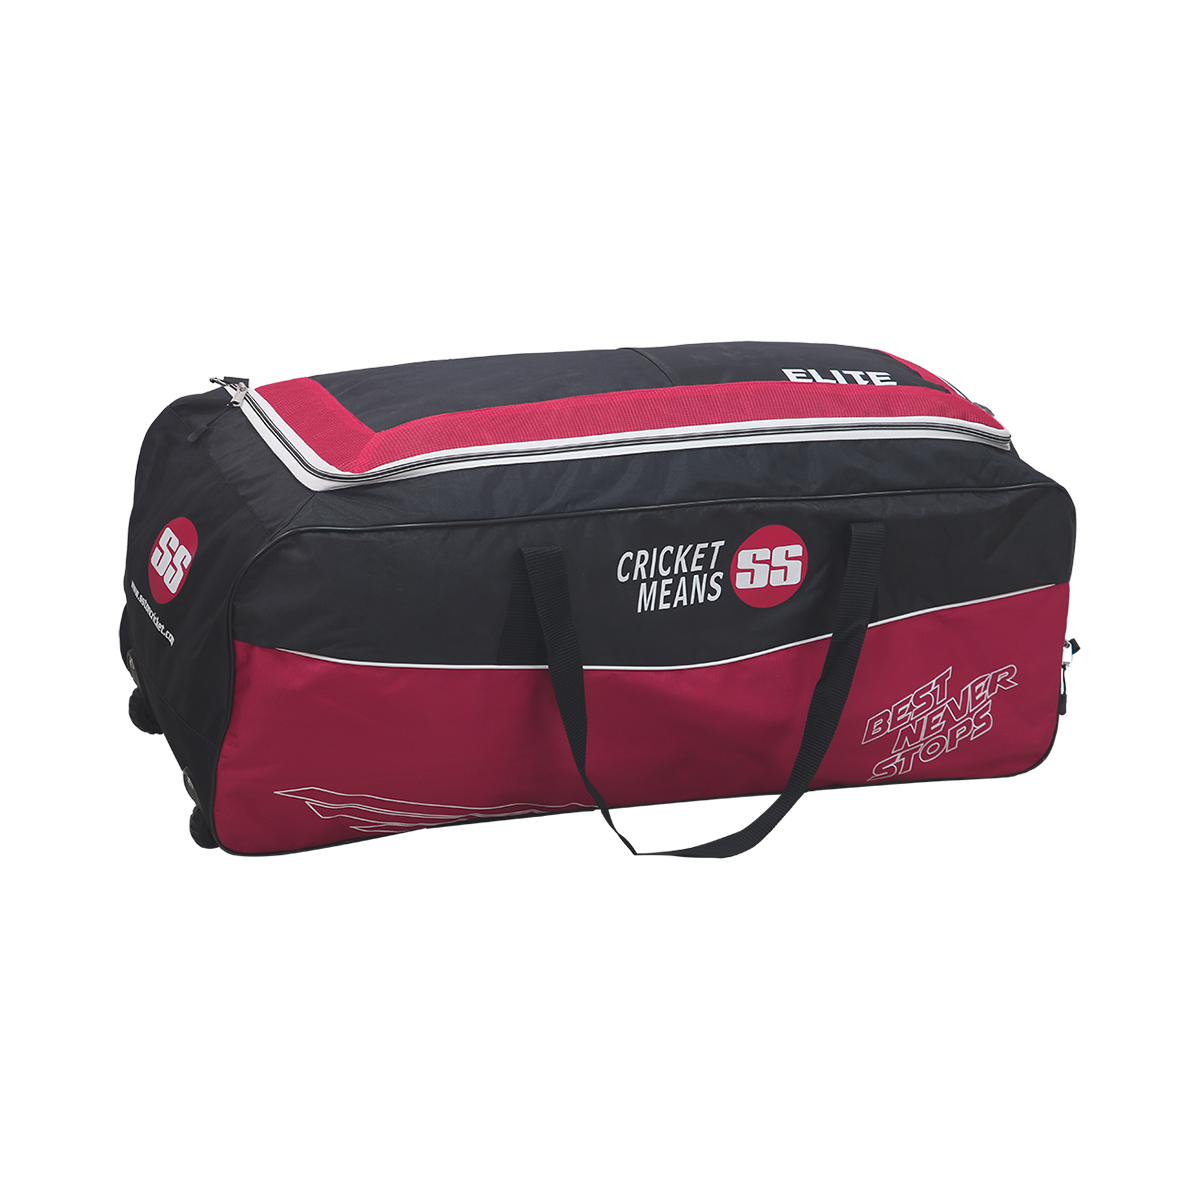 Cricket bag - Sports Equipment - 1758867919